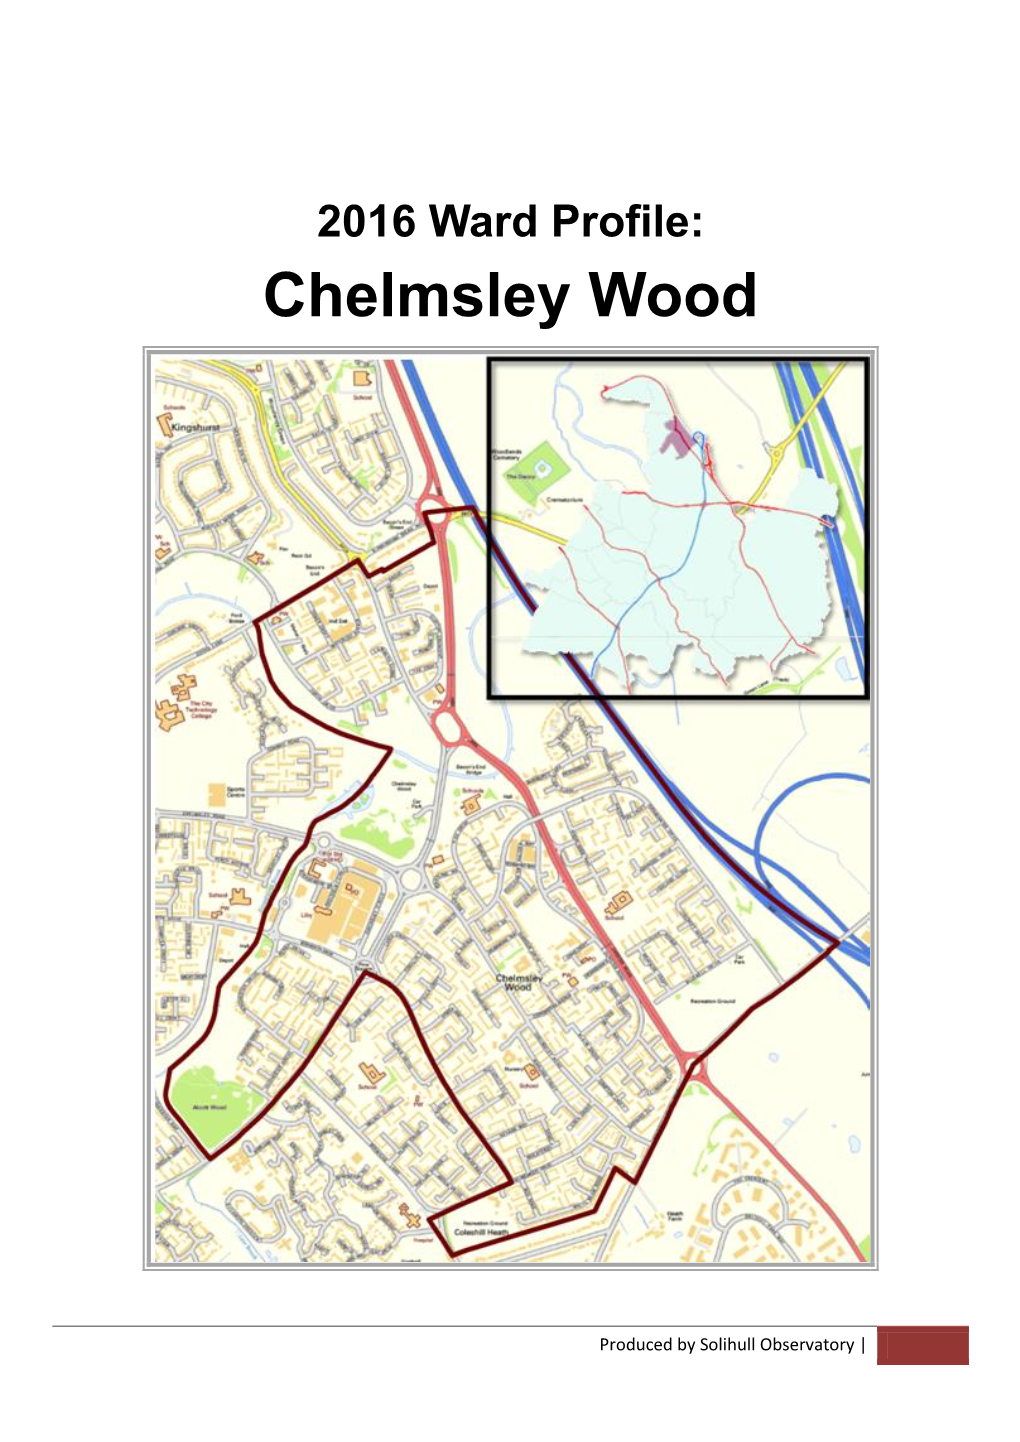 Chelmsley Wood Ward Profile 2016